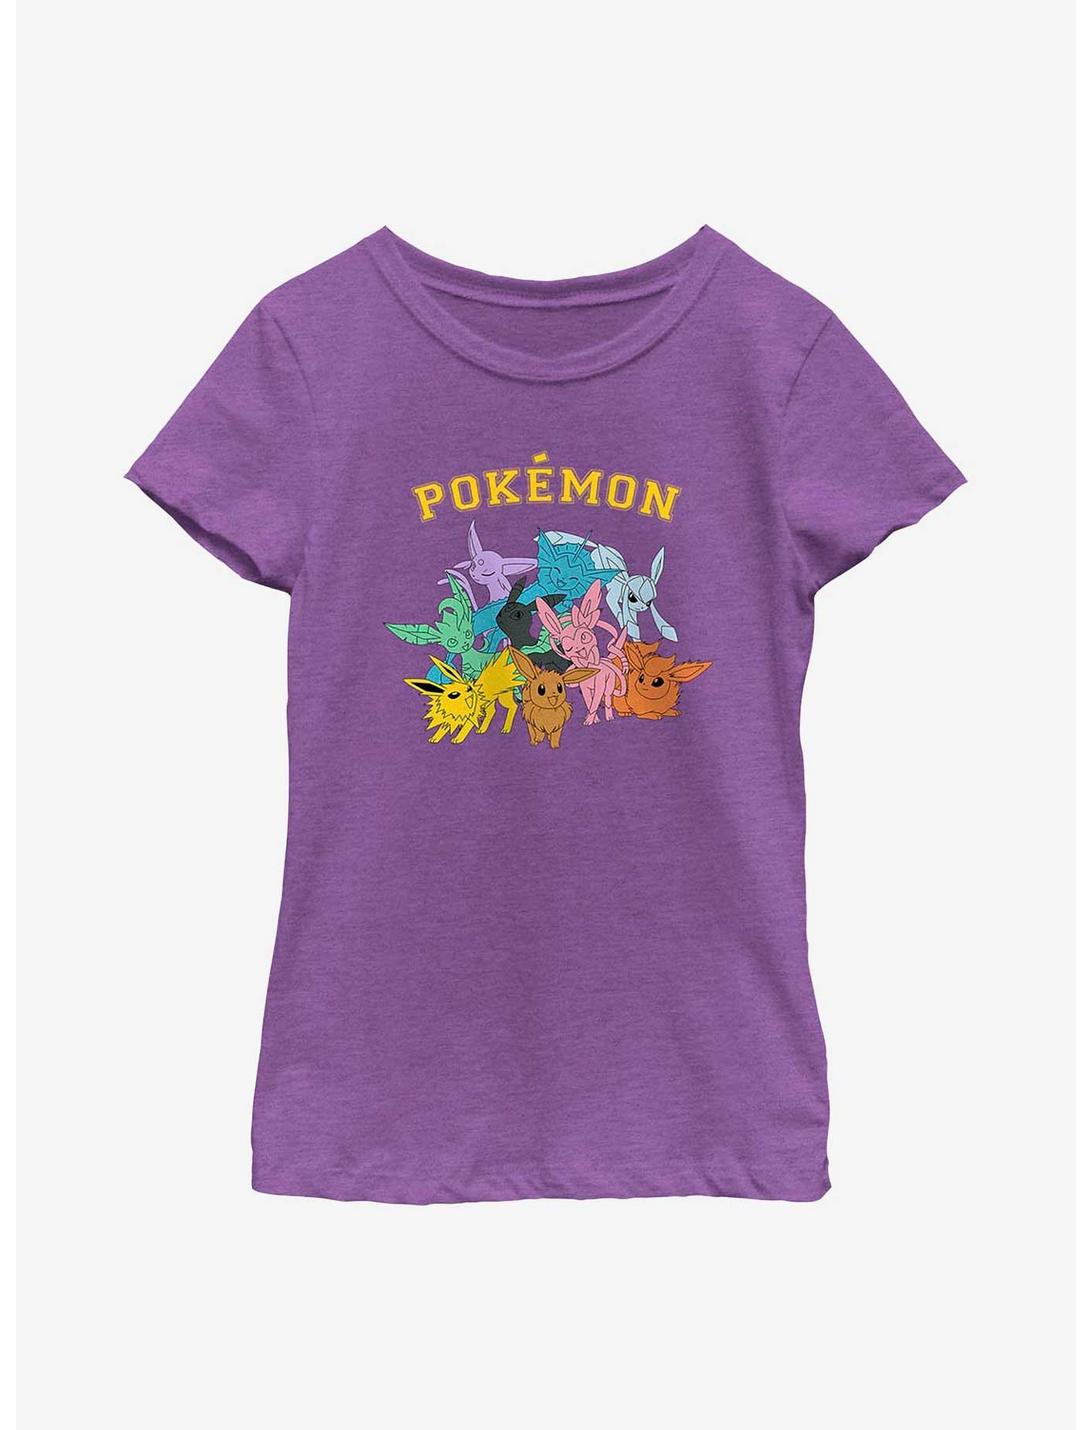 Pokemon Eeveelutions Youth Girls T-Shirt, PURPLE BERRY, hi-res